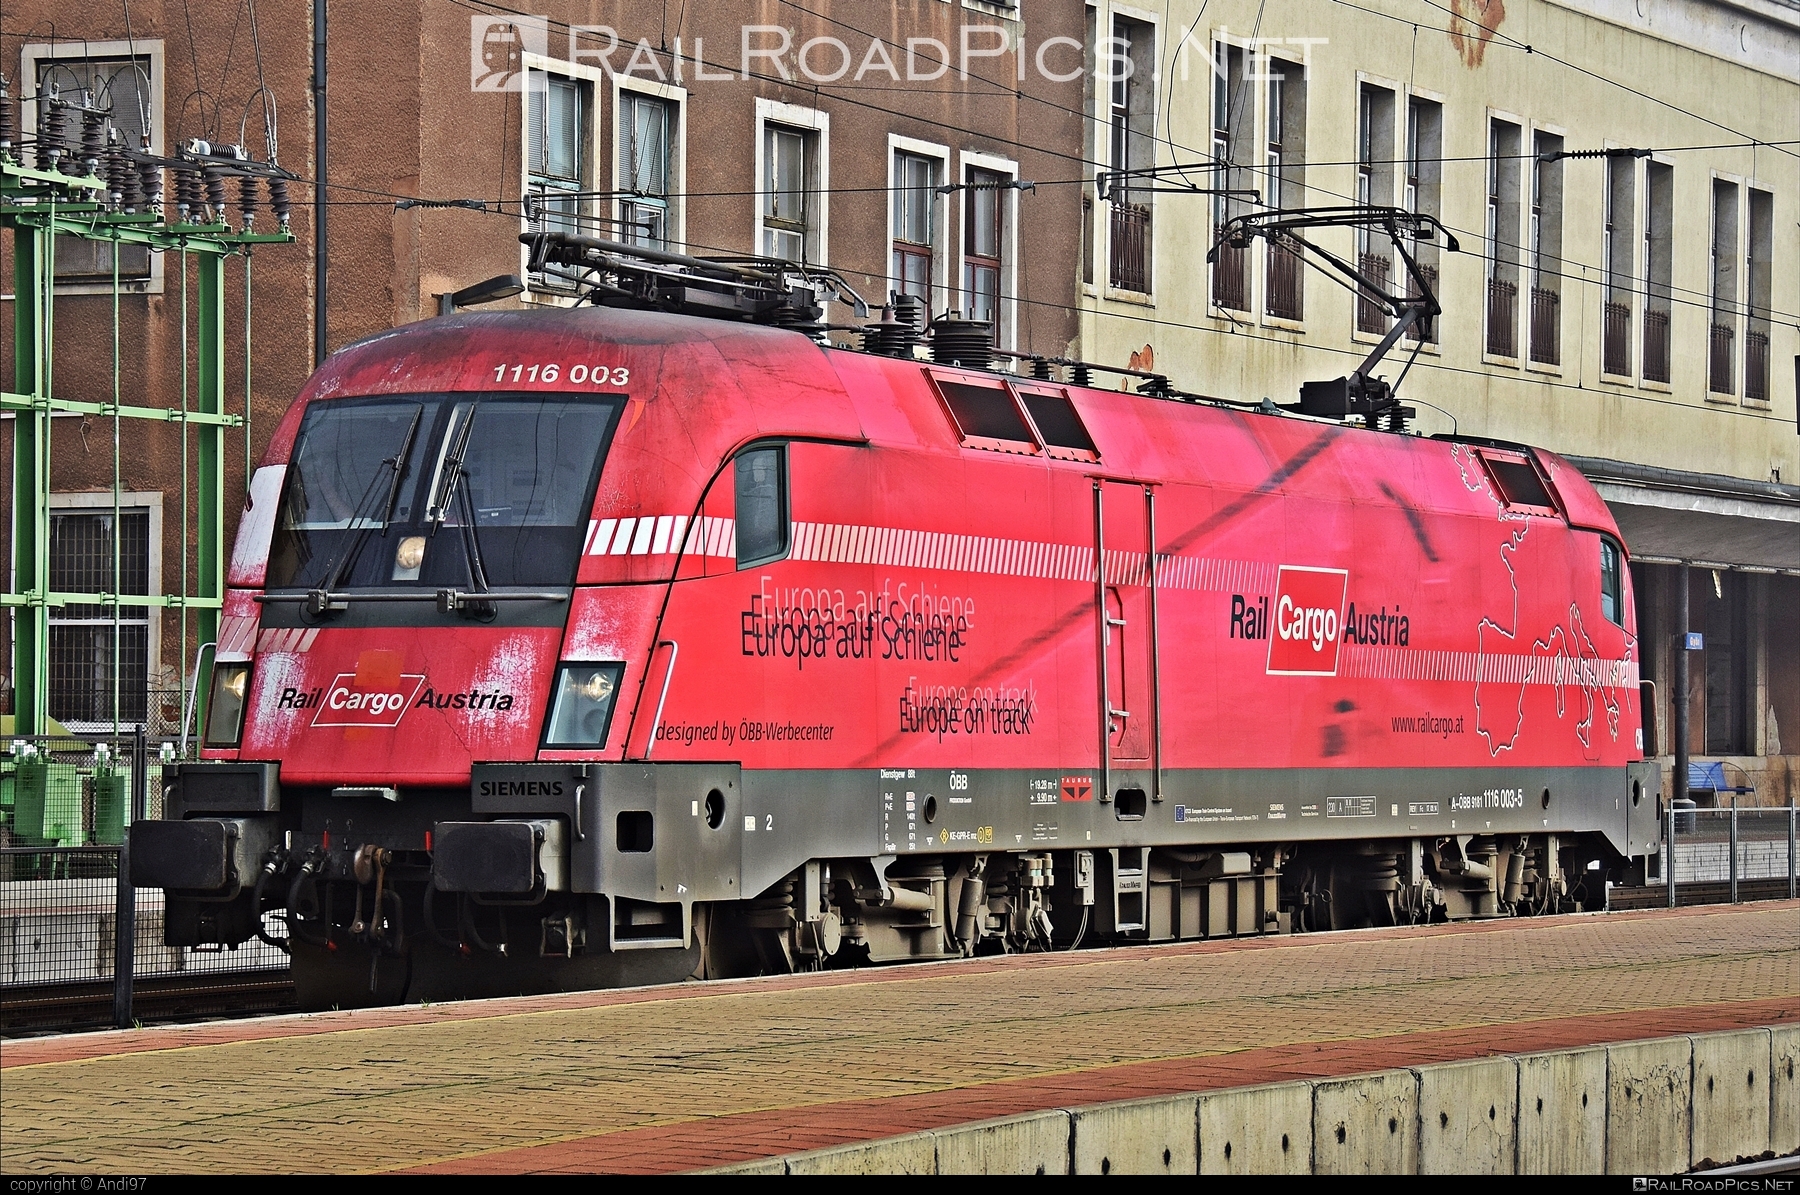 Siemens ES 64 U2 - 1116 003 operated by Rail Cargo Hungaria ZRt. #es64 #es64u2 #eurosprinter #obb #osterreichischebundesbahnen #rch #siemens #siemensEs64 #siemensEs64u2 #siemenstaurus #taurus #tauruslocomotive